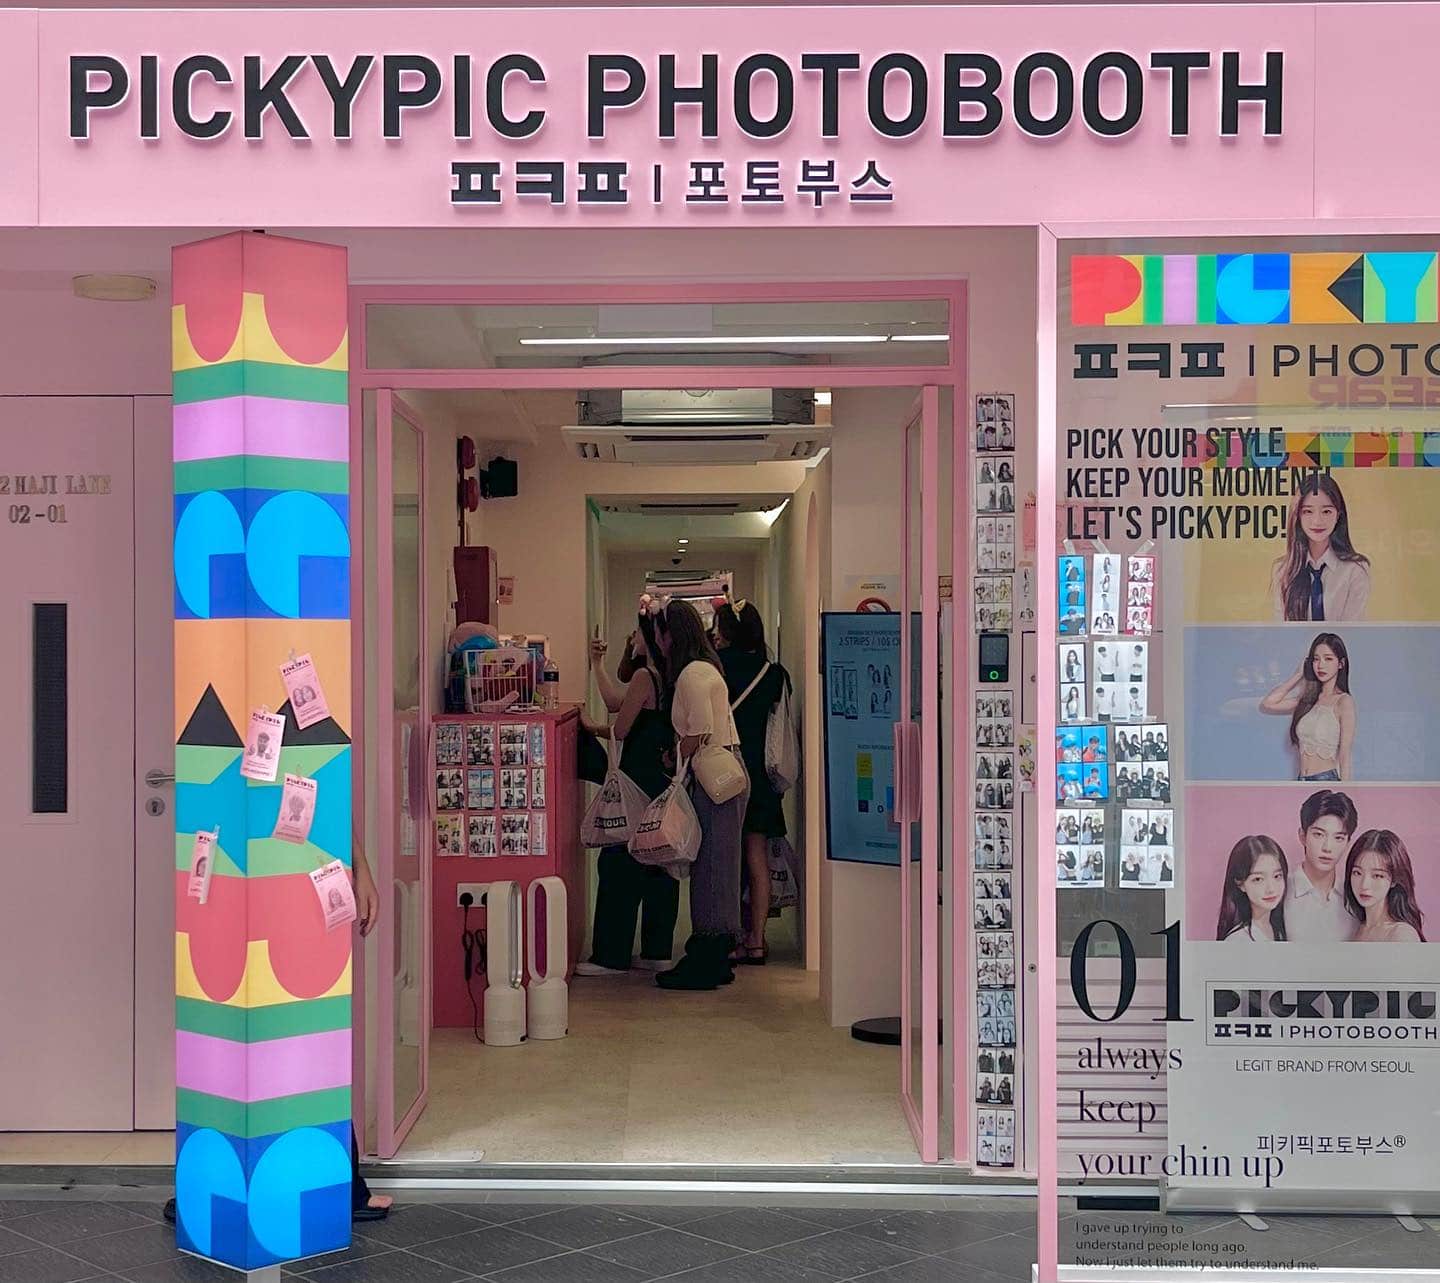 Pickypic Photobooth